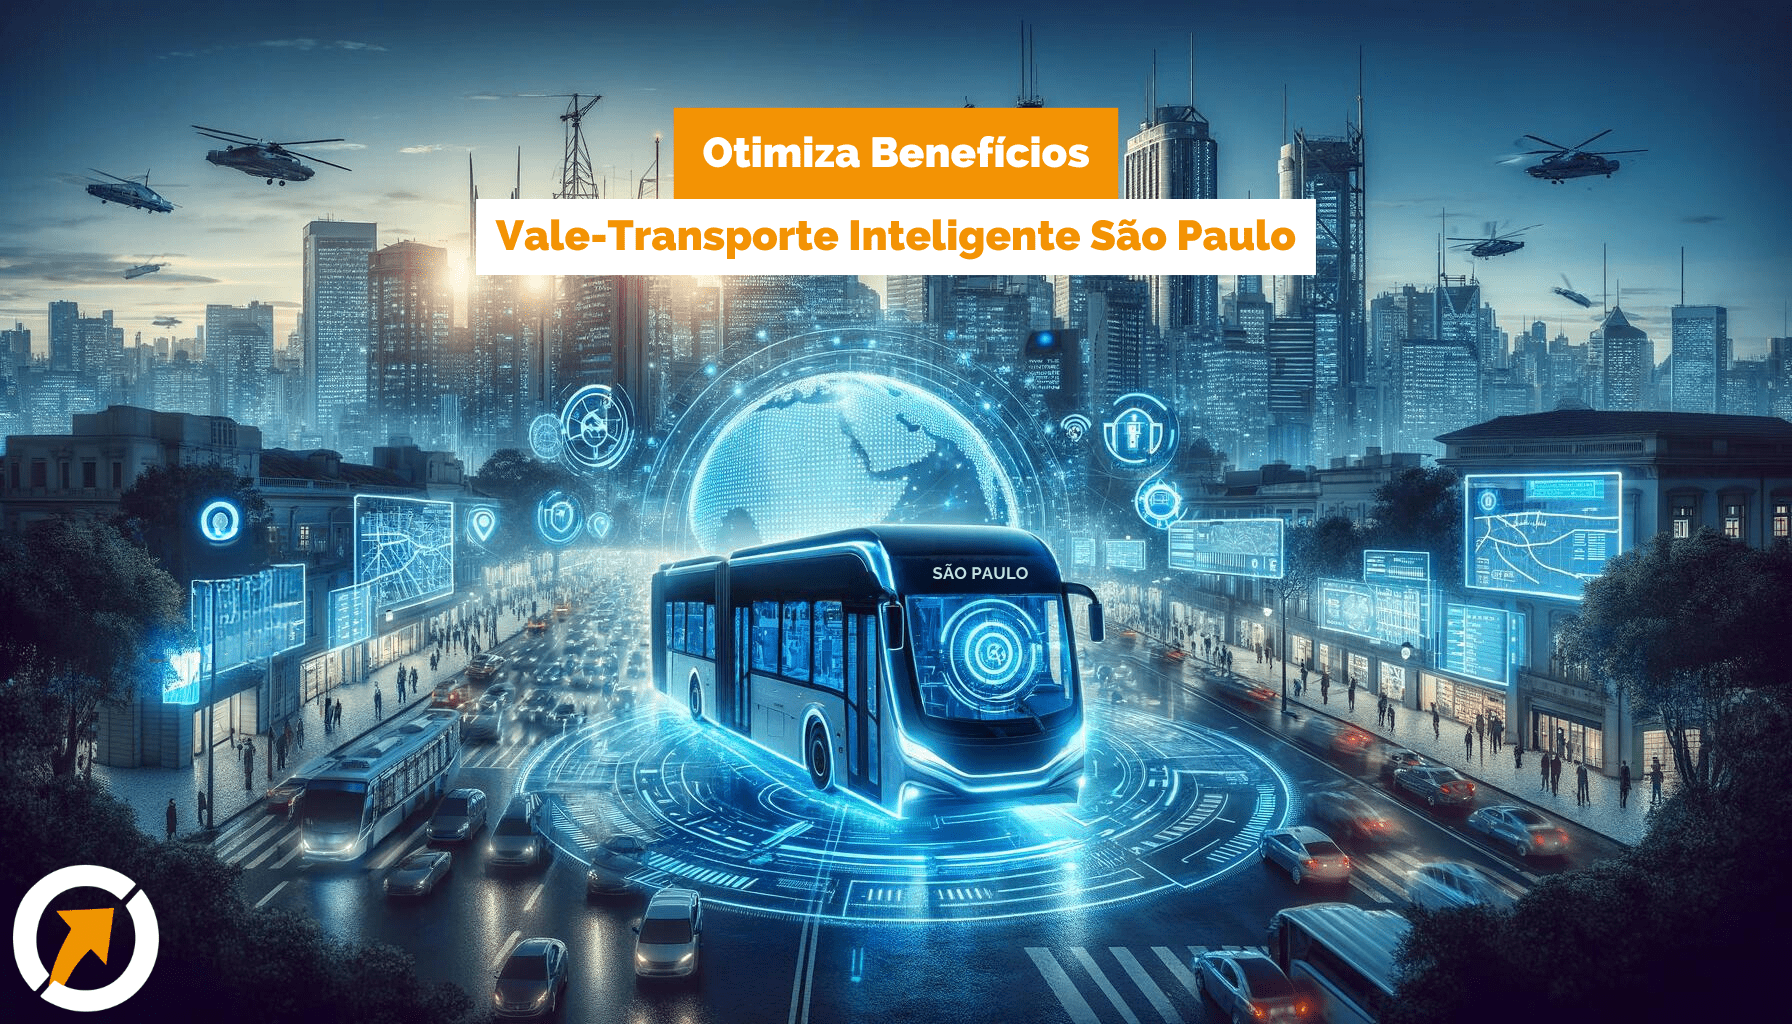 Vale-Transporte Inteligente São Paulo